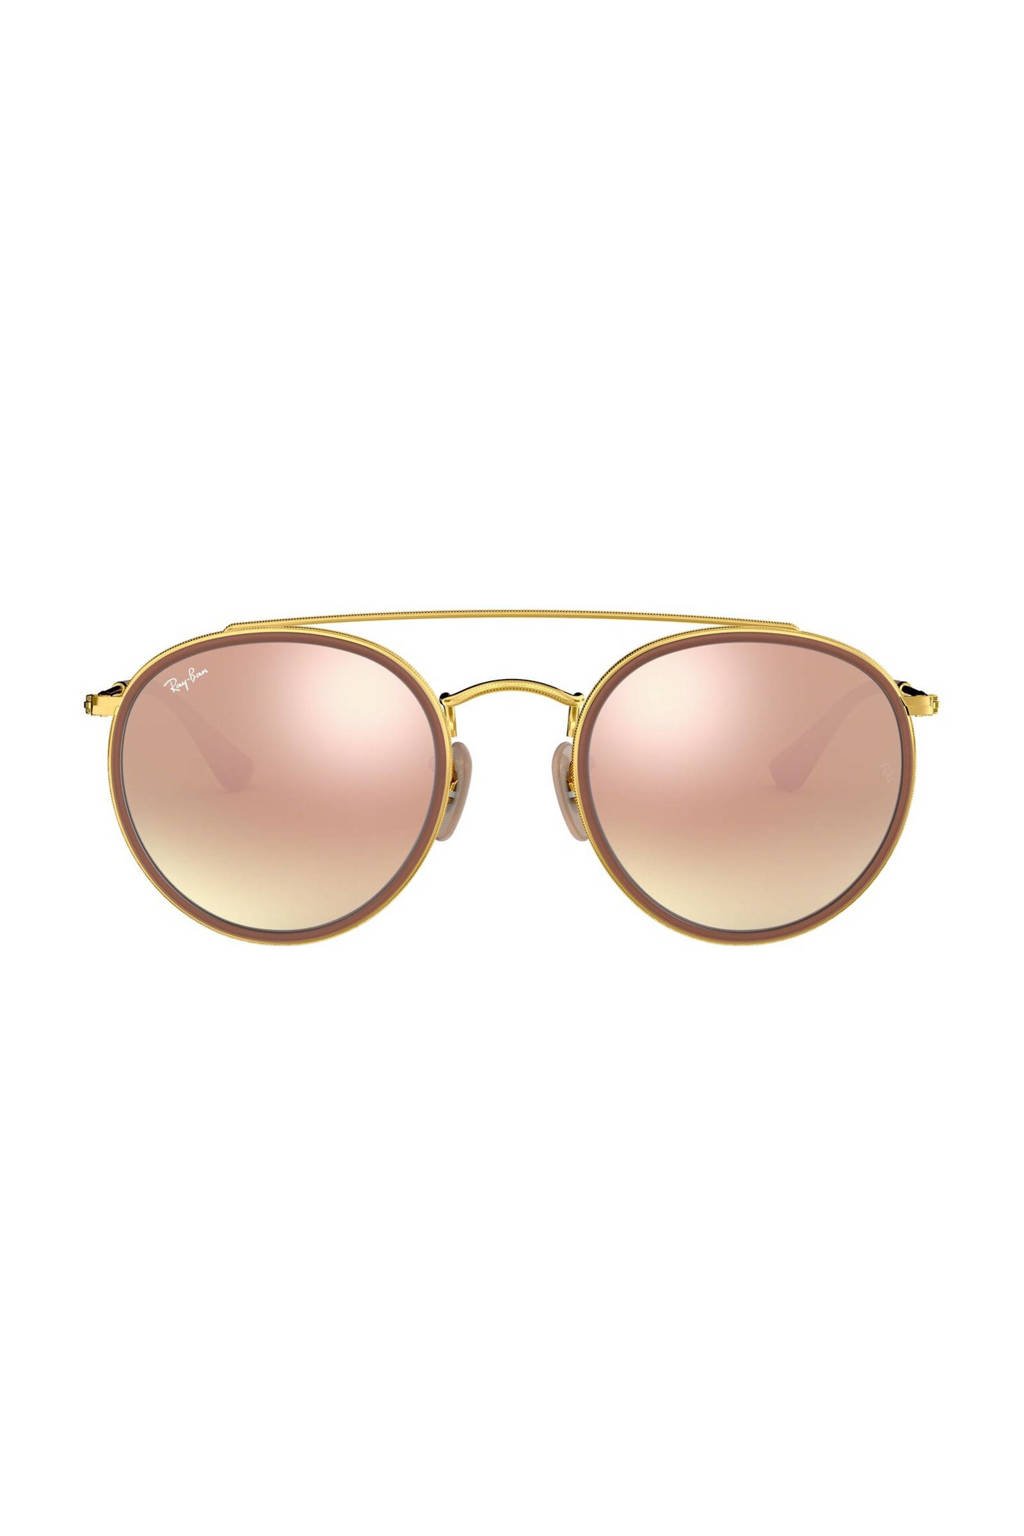 Ray-Ban zonnebril goudkleurig/roze | wehkamp